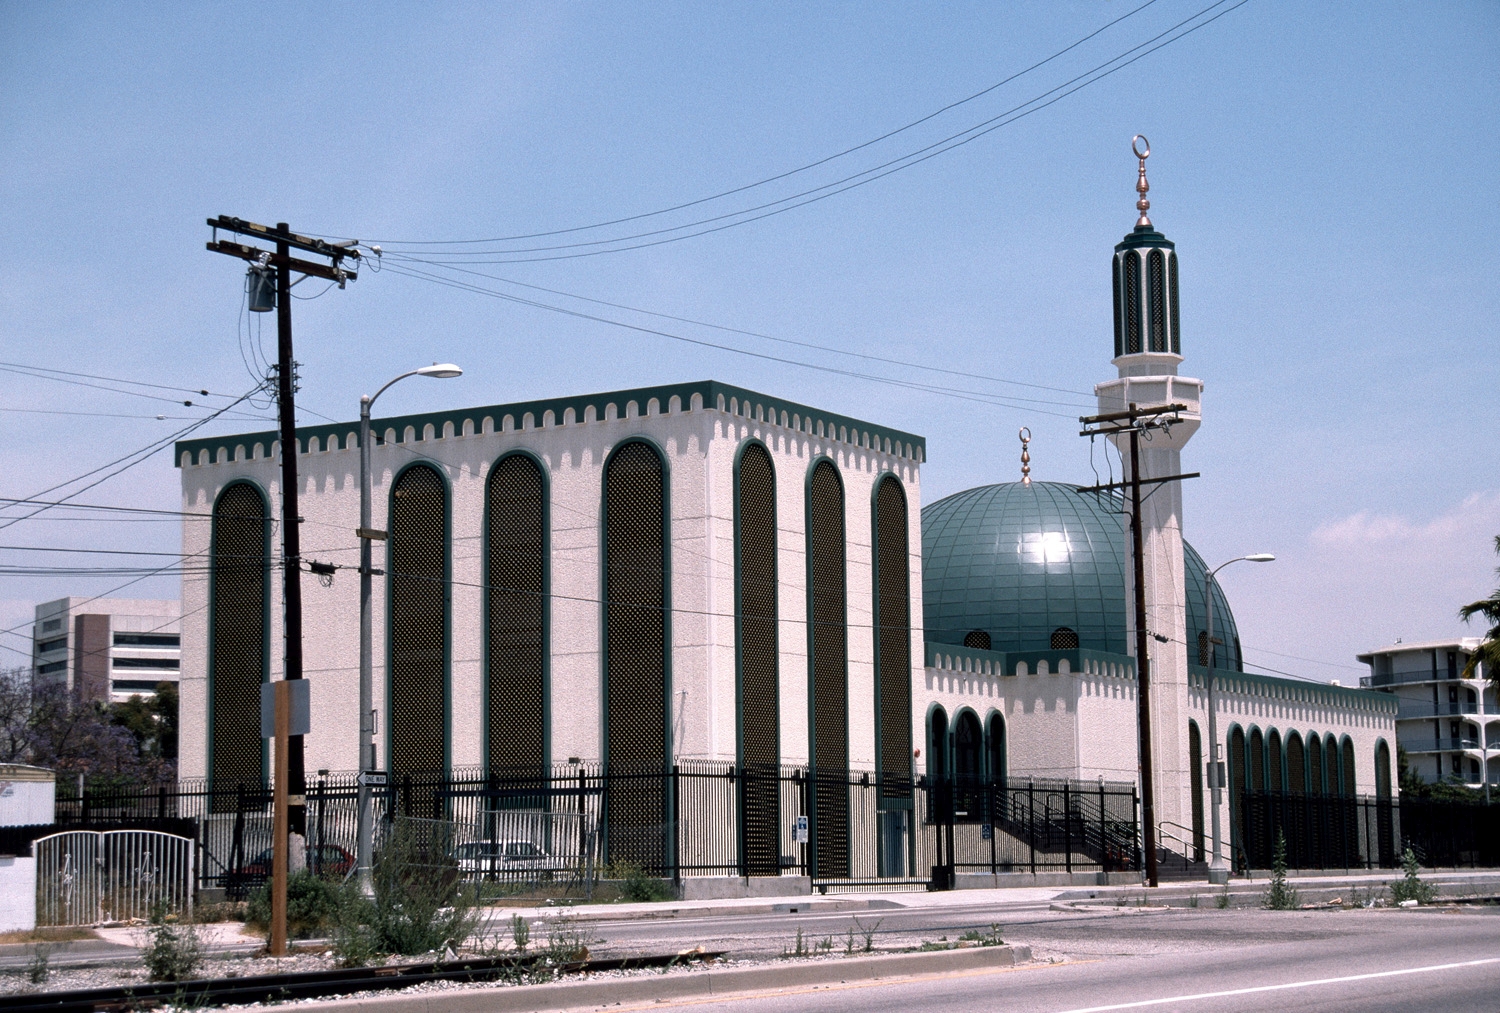 Masjid Omar ibn al-Khattab